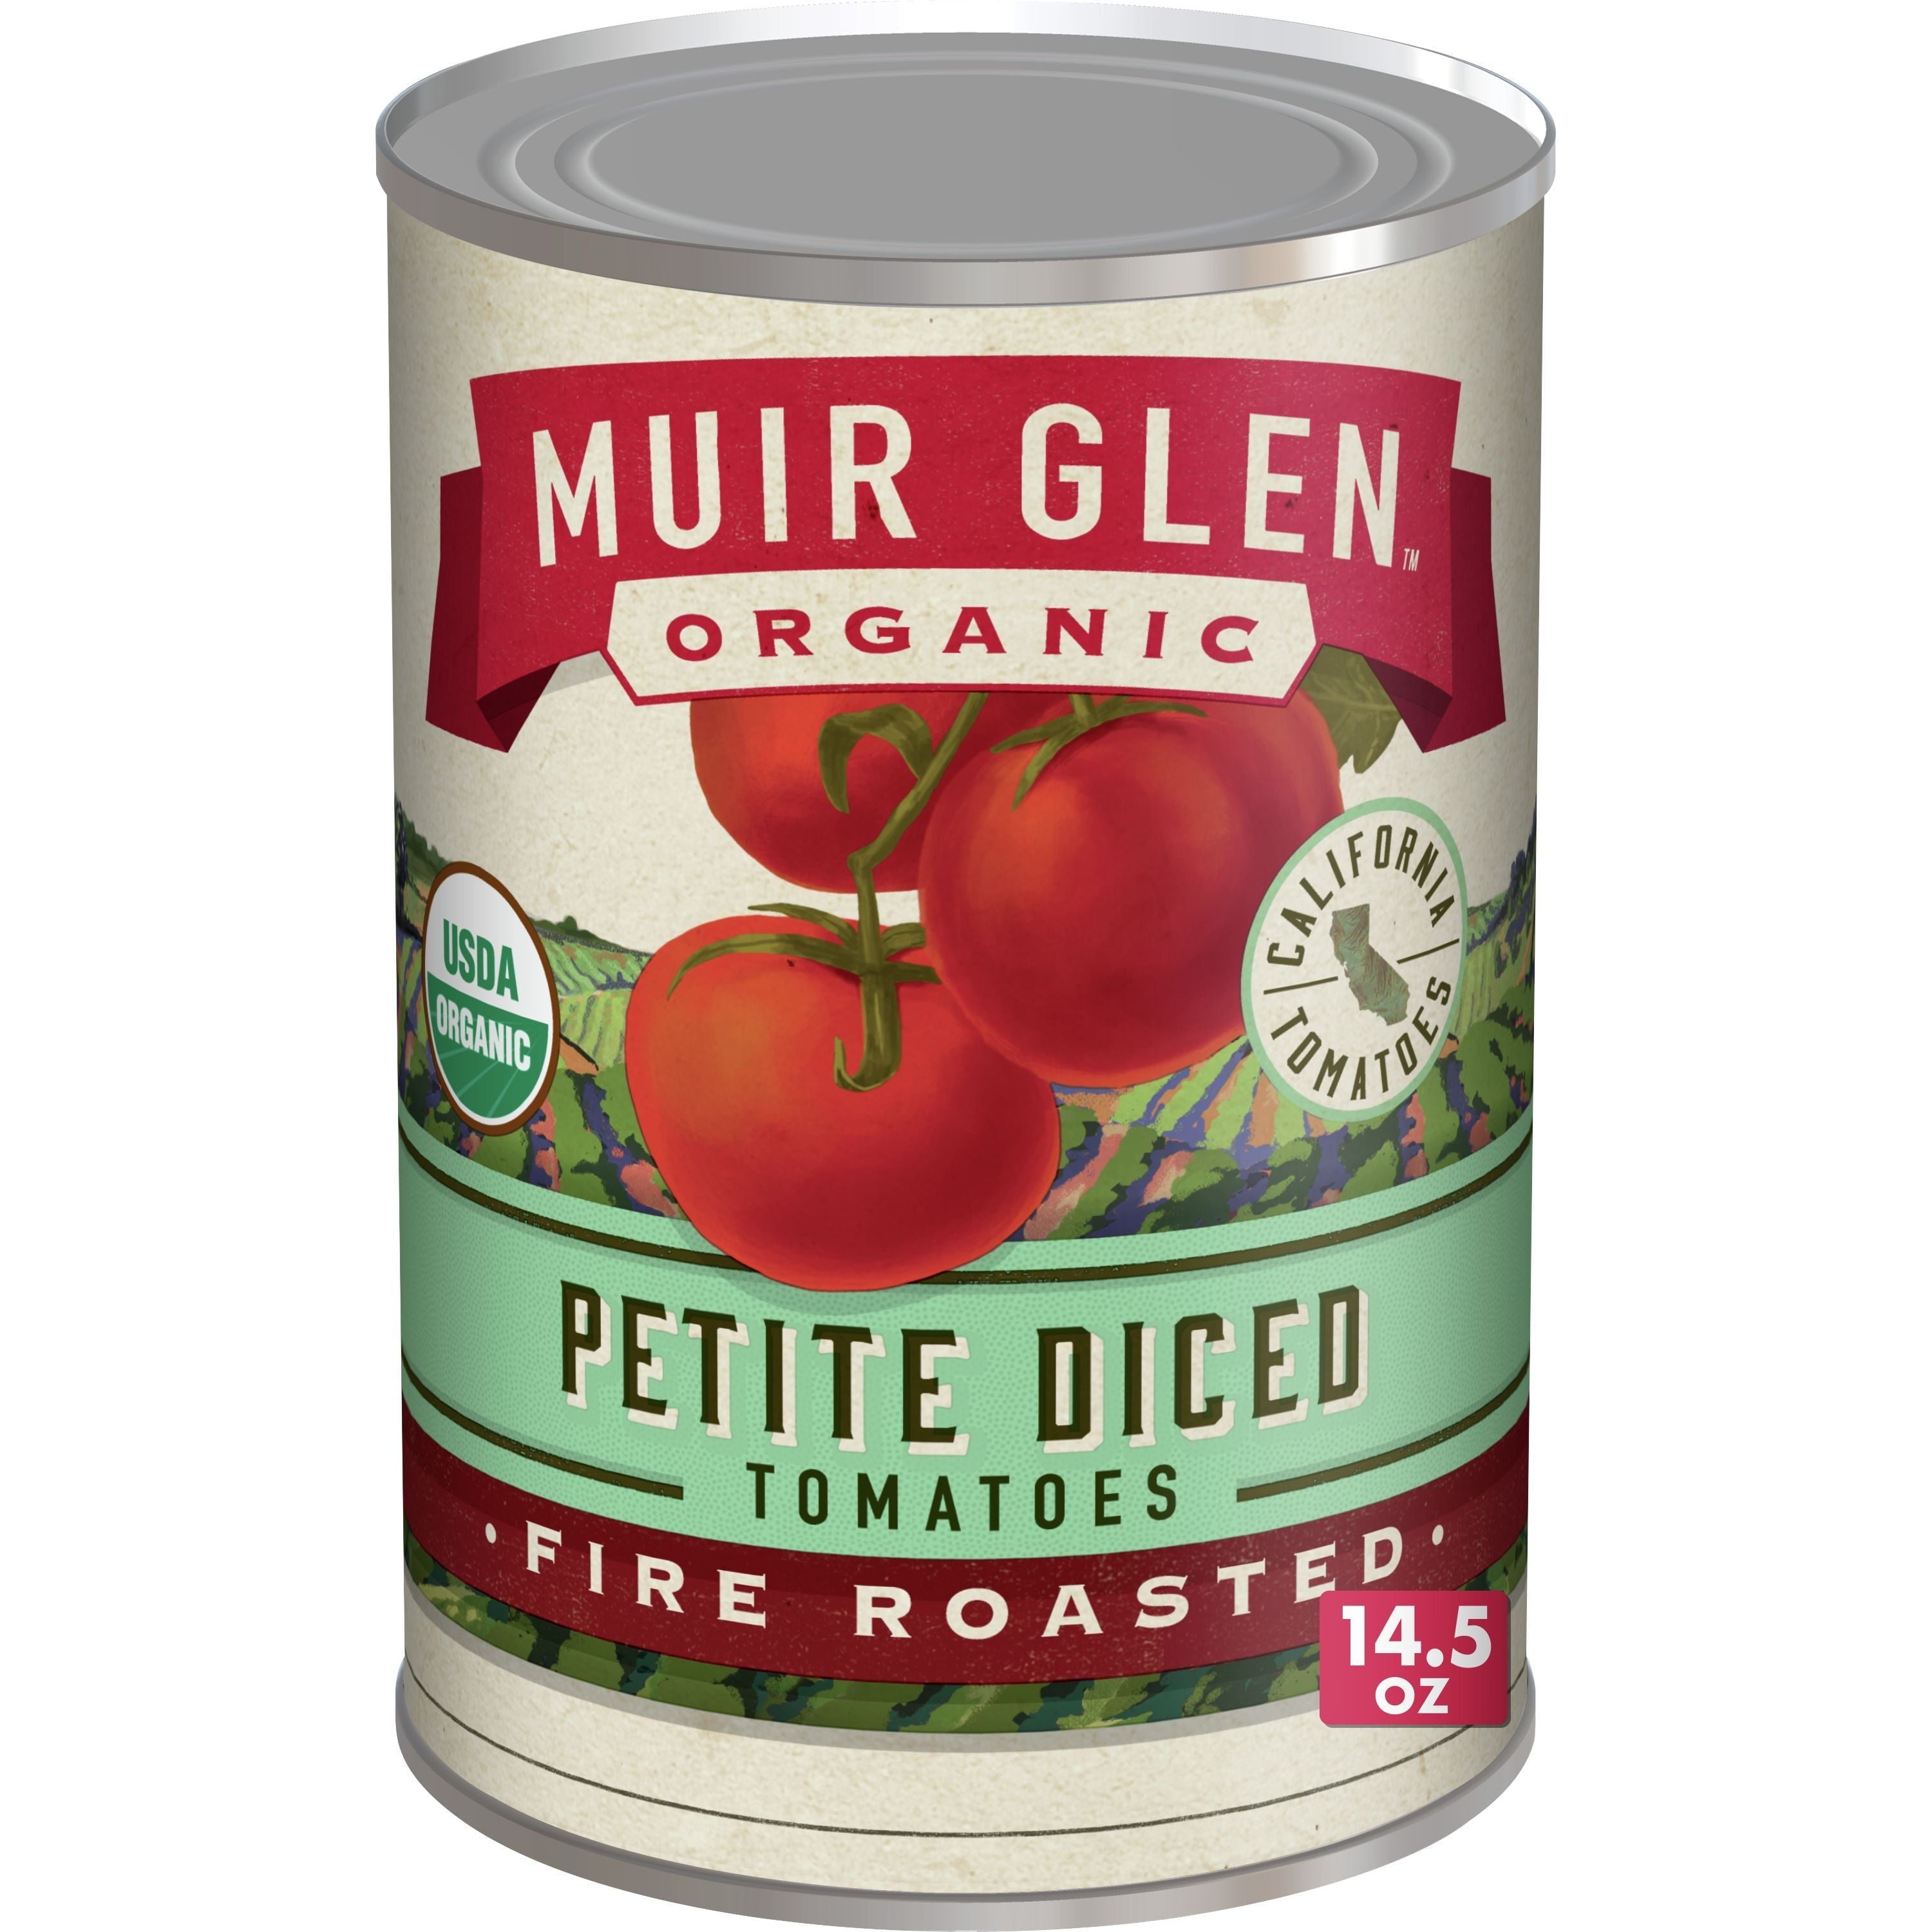 Muir Glen Organic Petite Diced Tomatoes Fire Roasted 14.5 oz